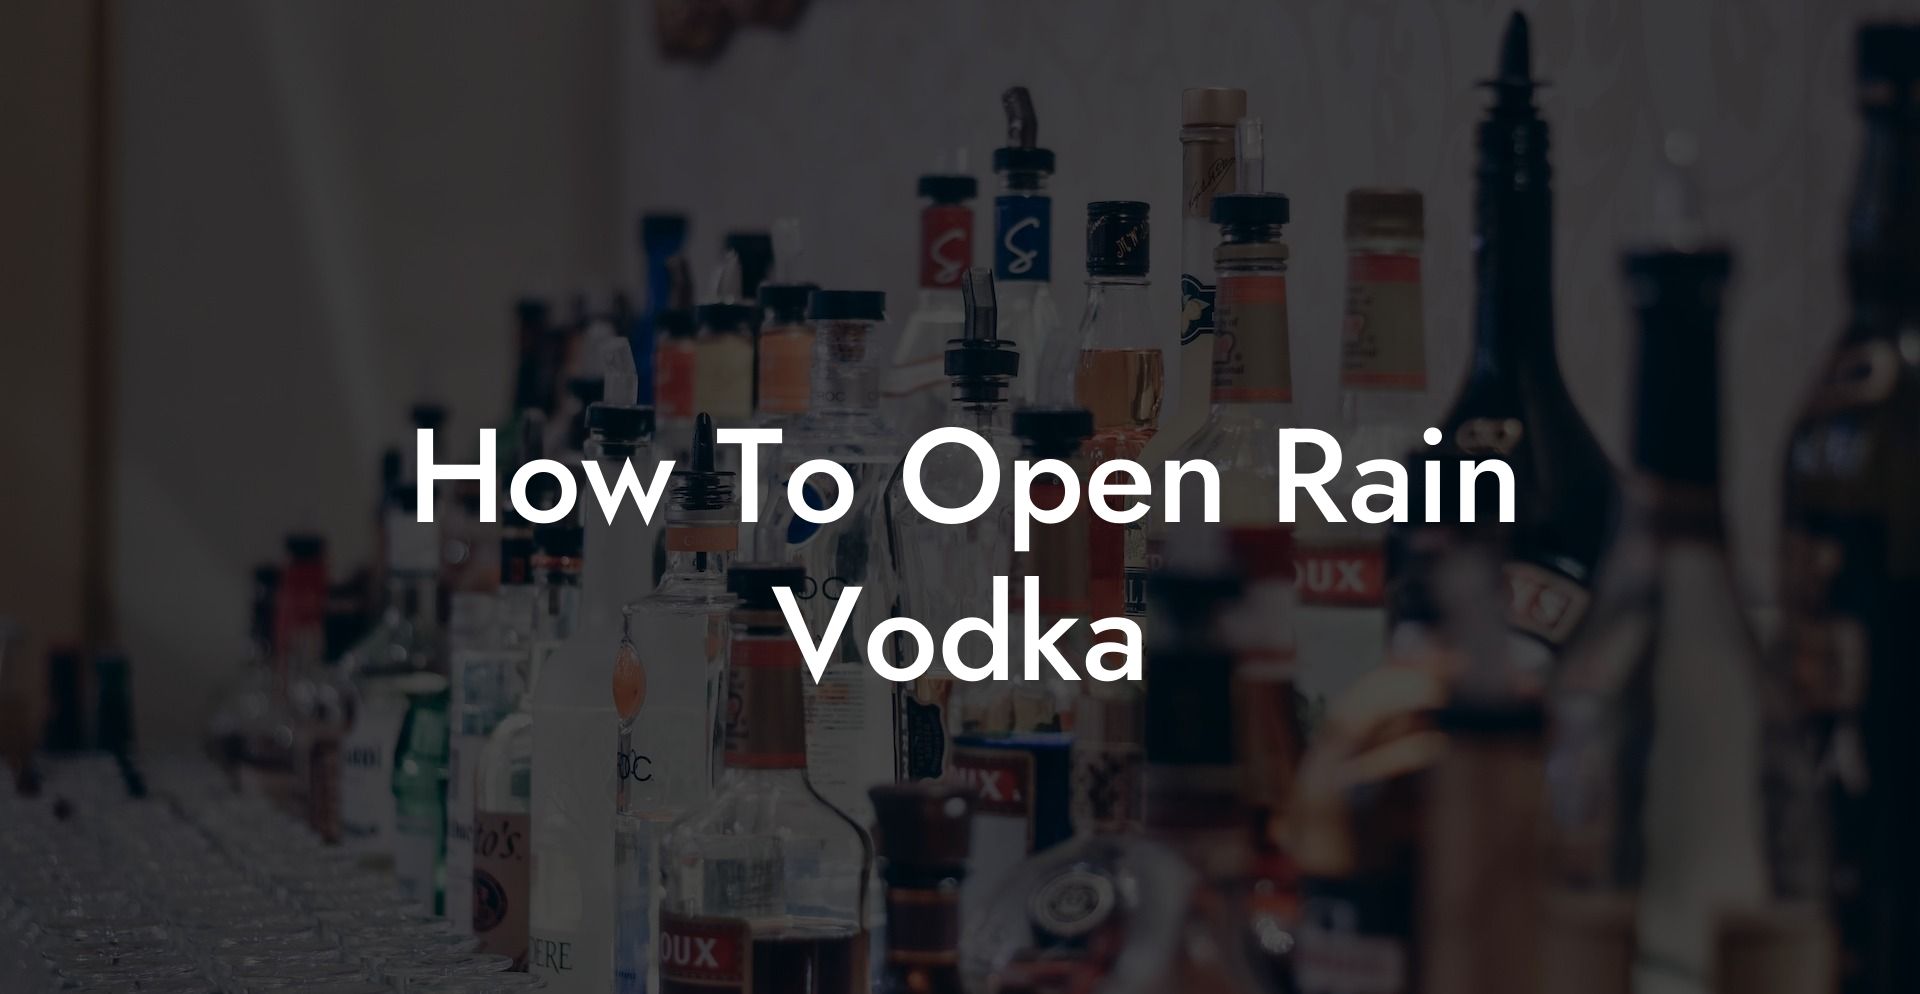 How To Open Rain Vodka